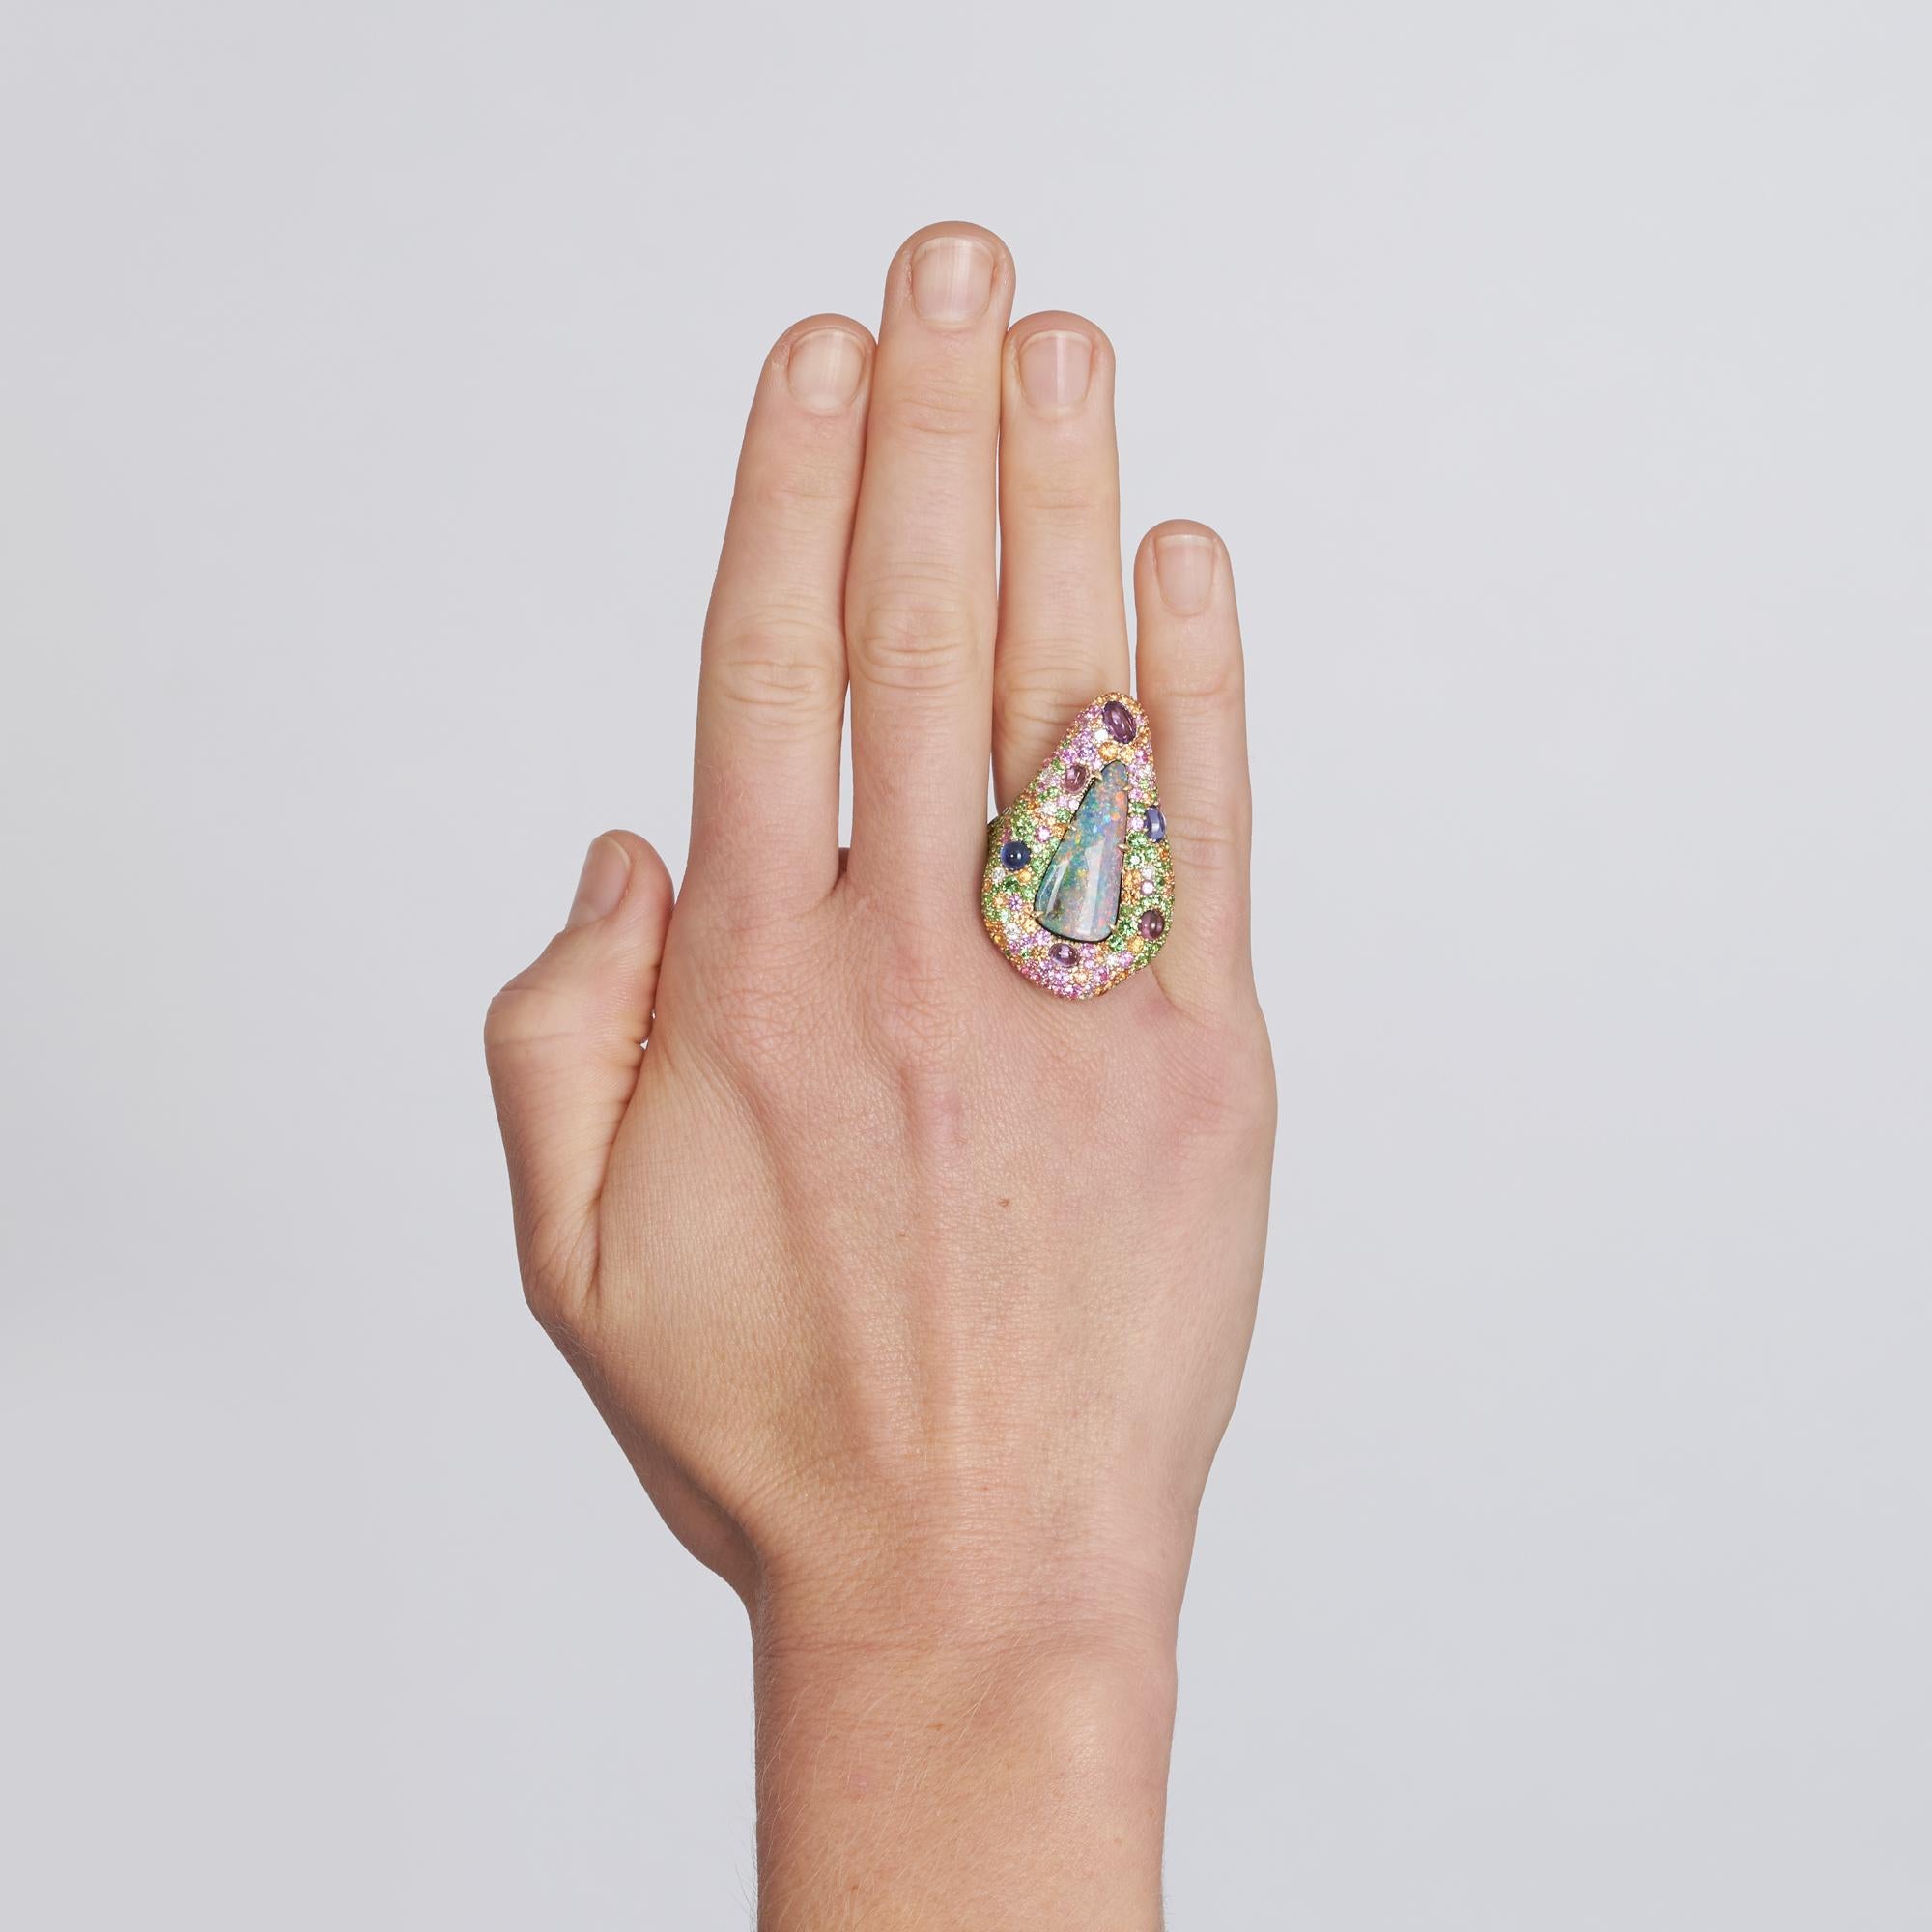 Margot McKinney 18 Karat Yellow Gold Ring with Opal, Tsavorite and Pink Sapphire 1